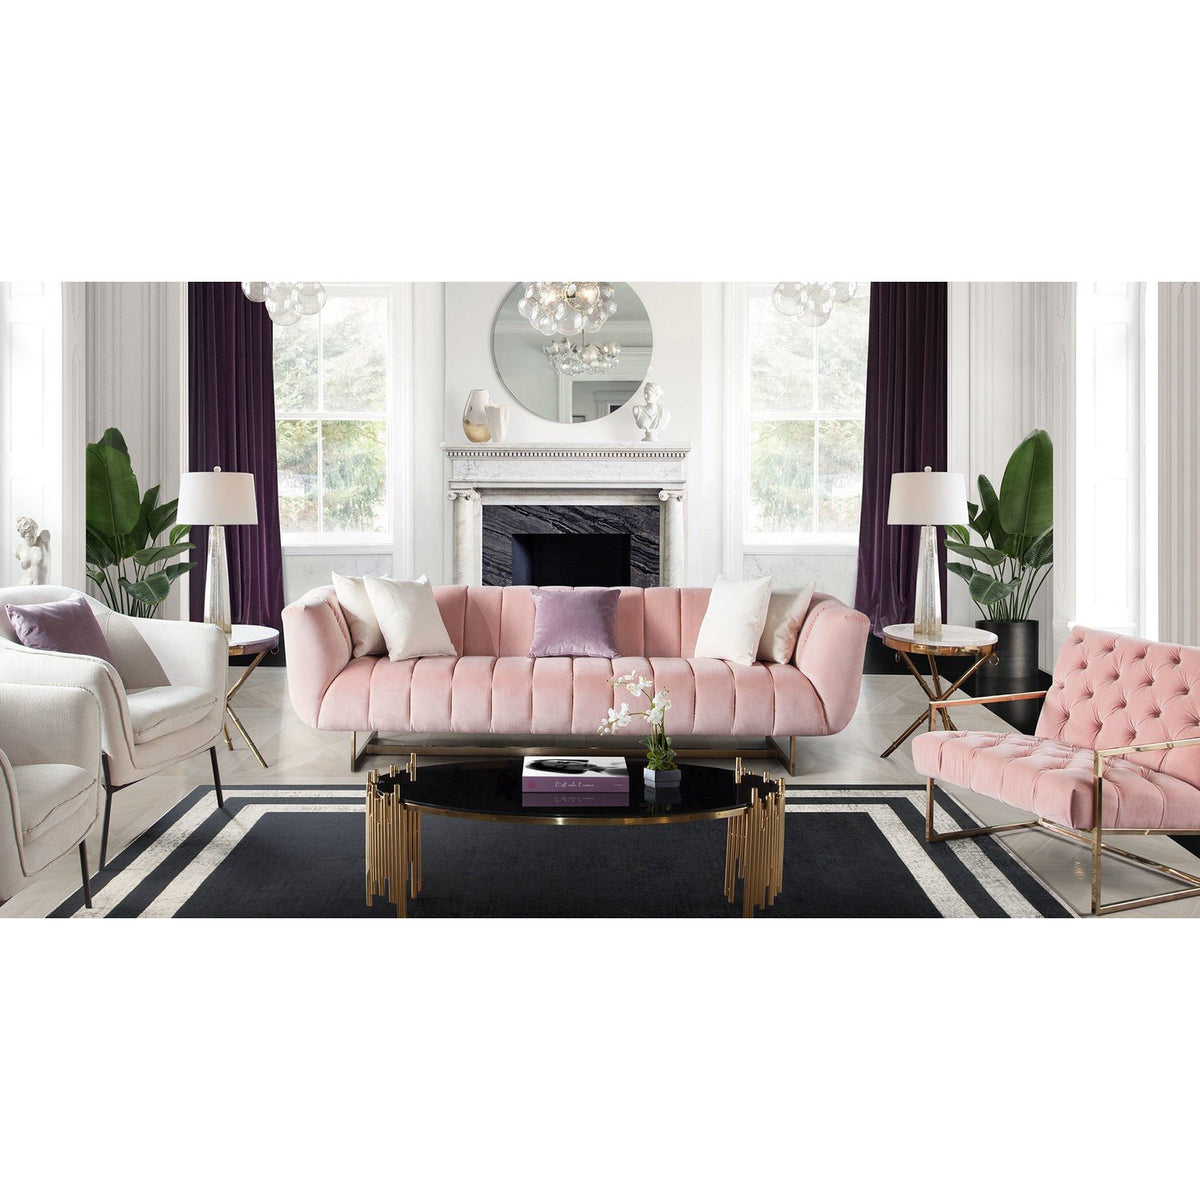 Venus Sofa, Blush - Be Bold Furniture